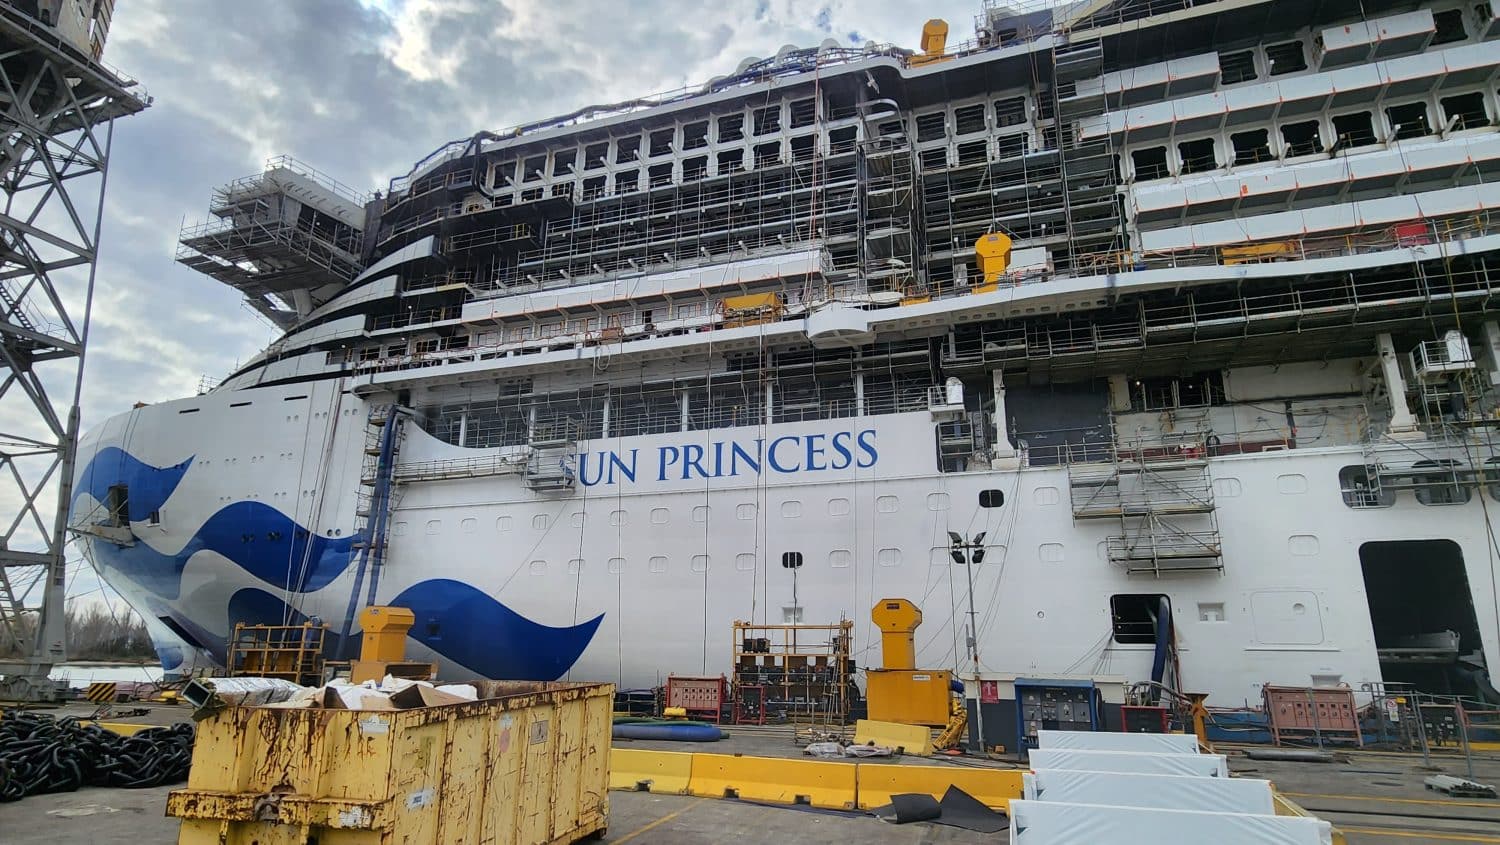 Sun Princess at the shipyard under construction